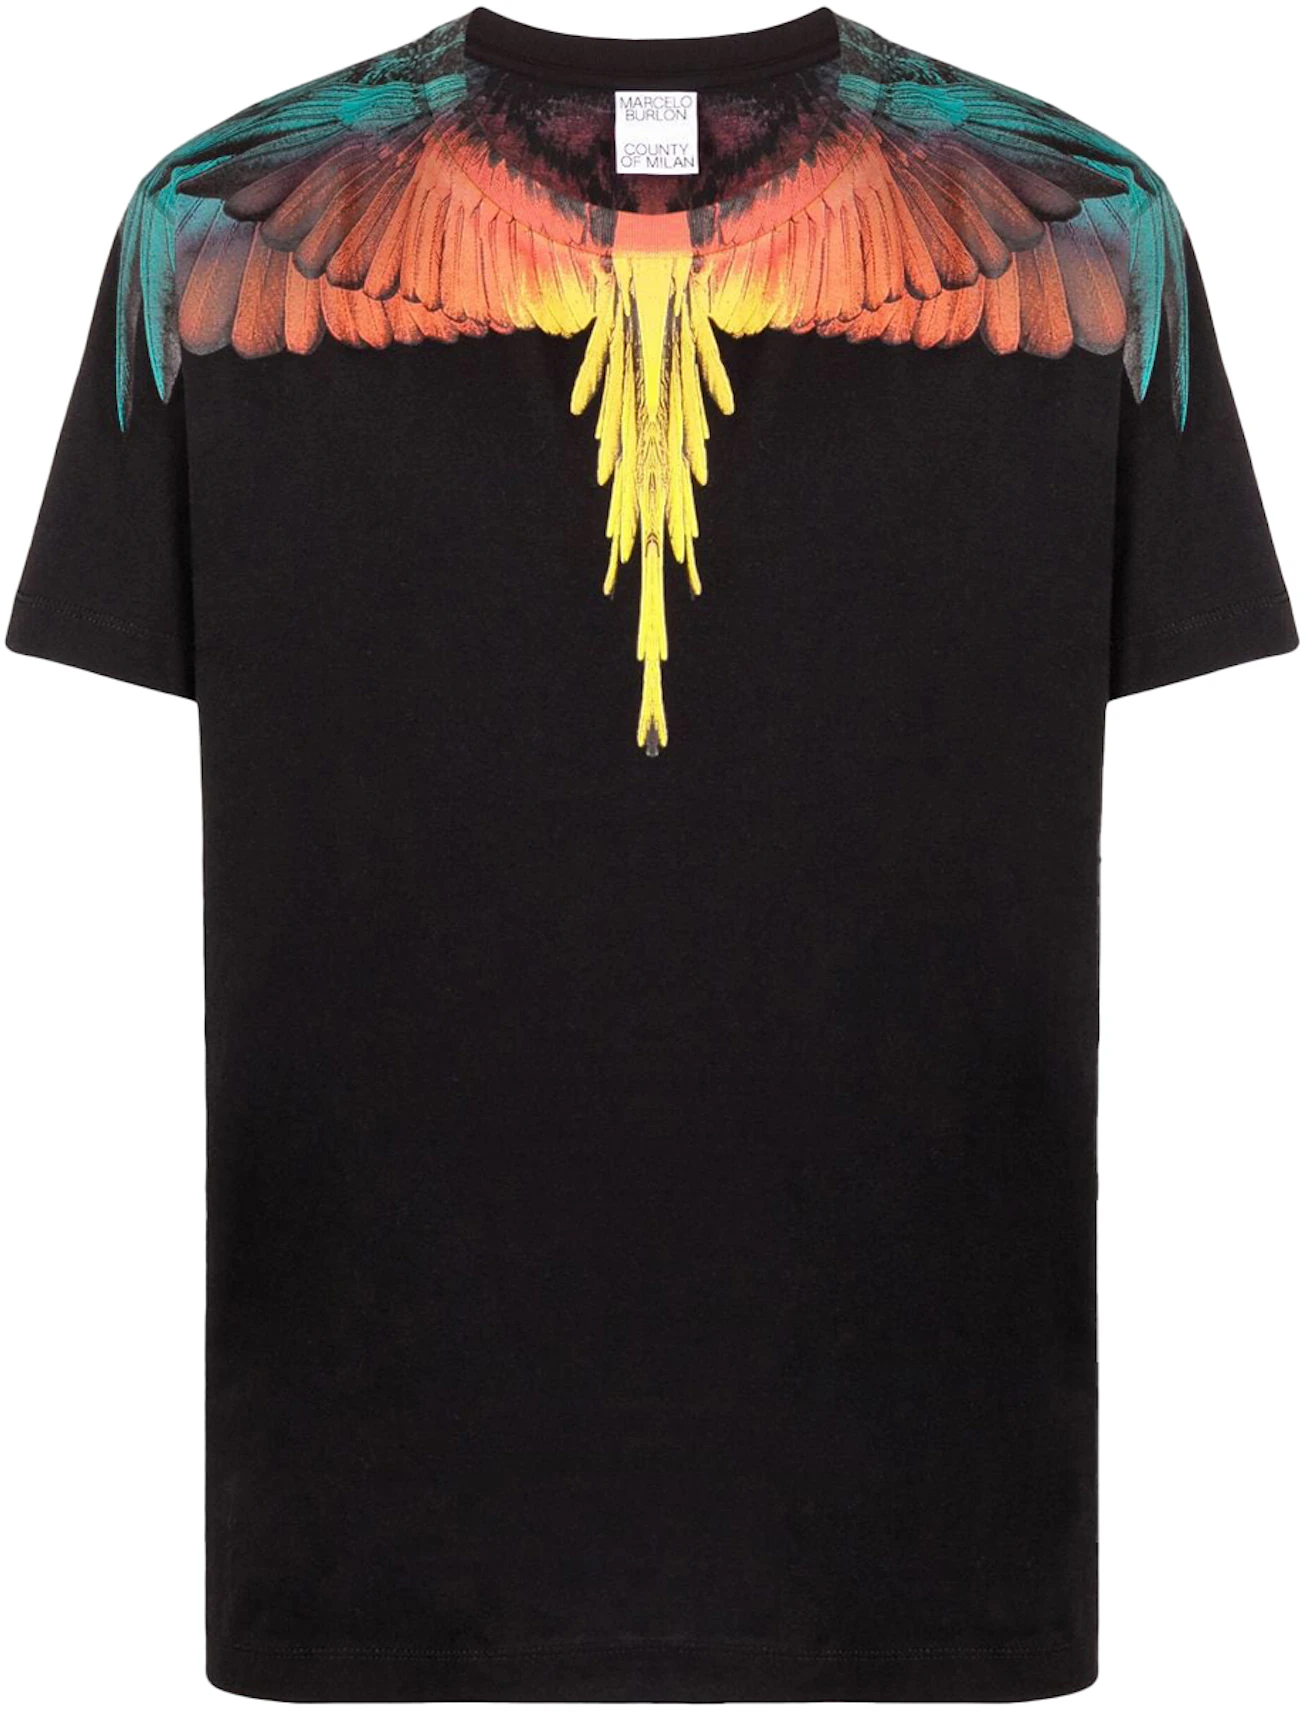 Marcelo Print T-Shirt Black/Blue/Orange - SS22 US